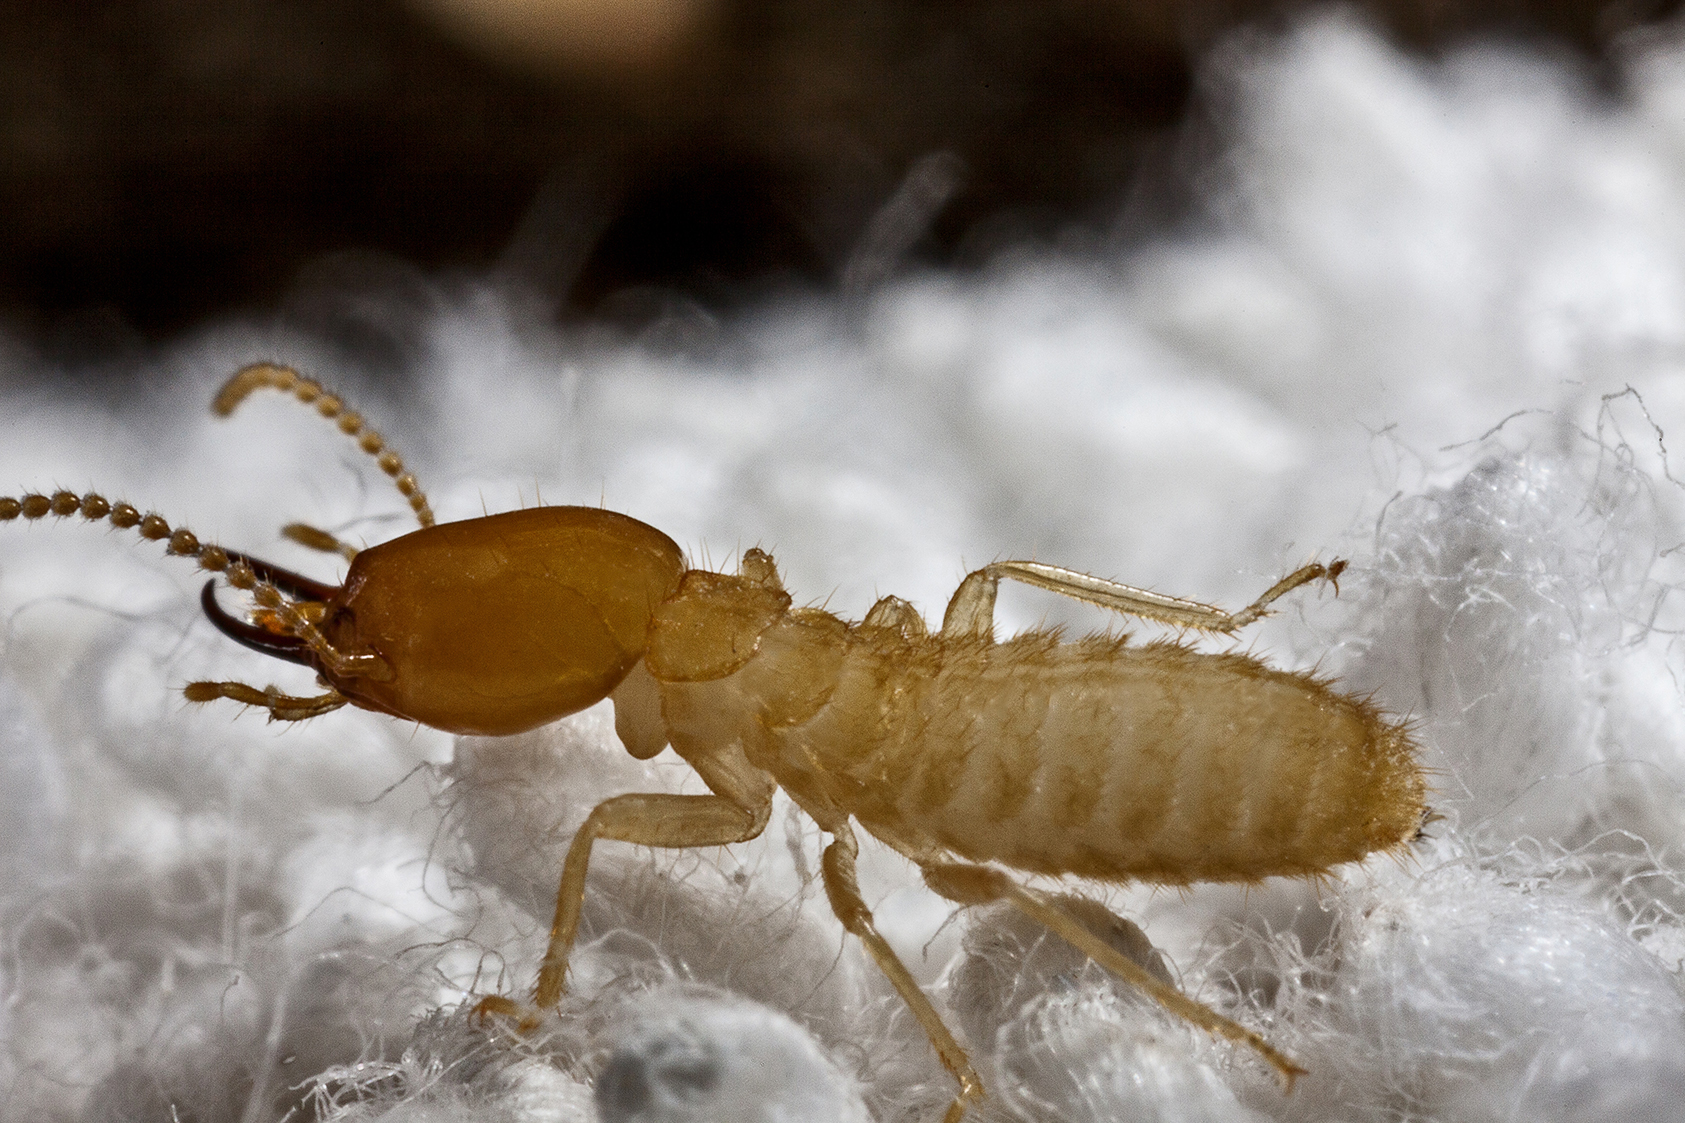 Formosan Termites - Termite Information for Kids